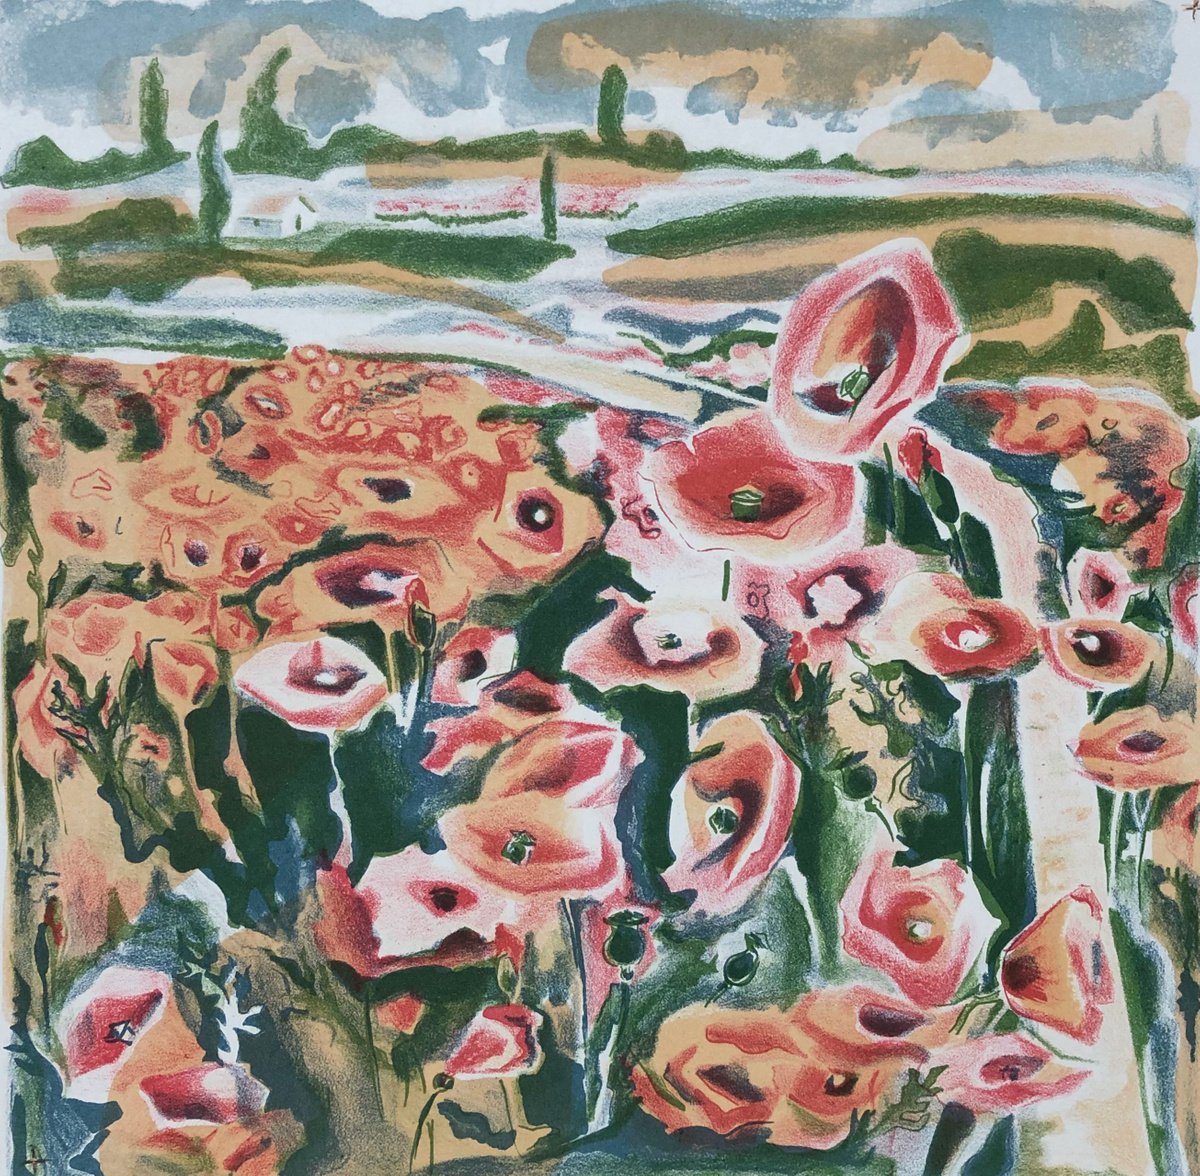 Field of poppies by Maria Zaytseva